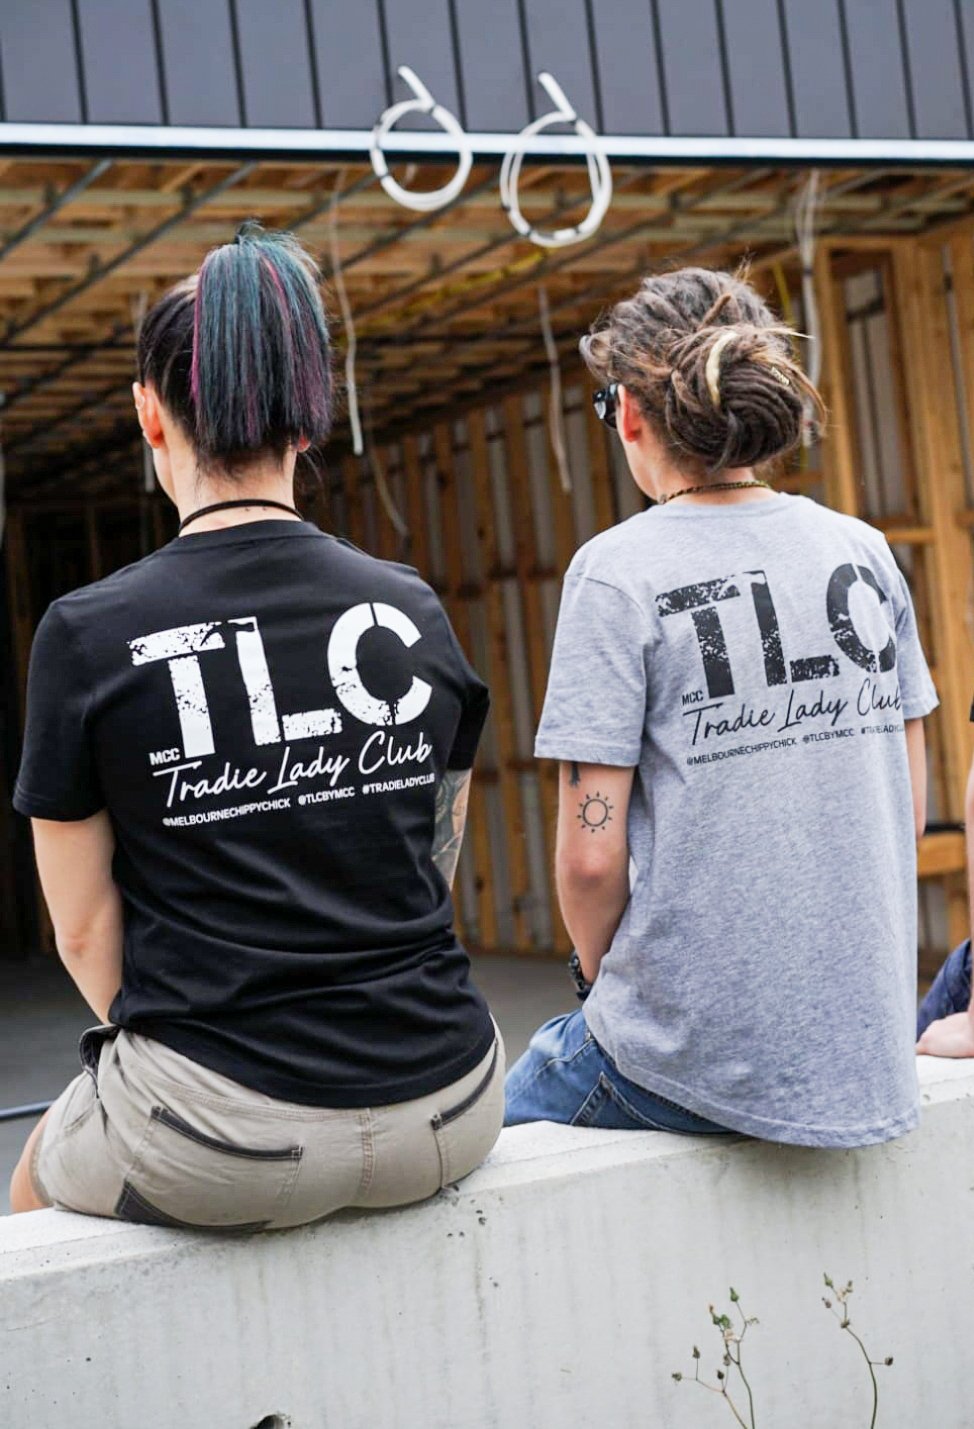 TLC T-shirt